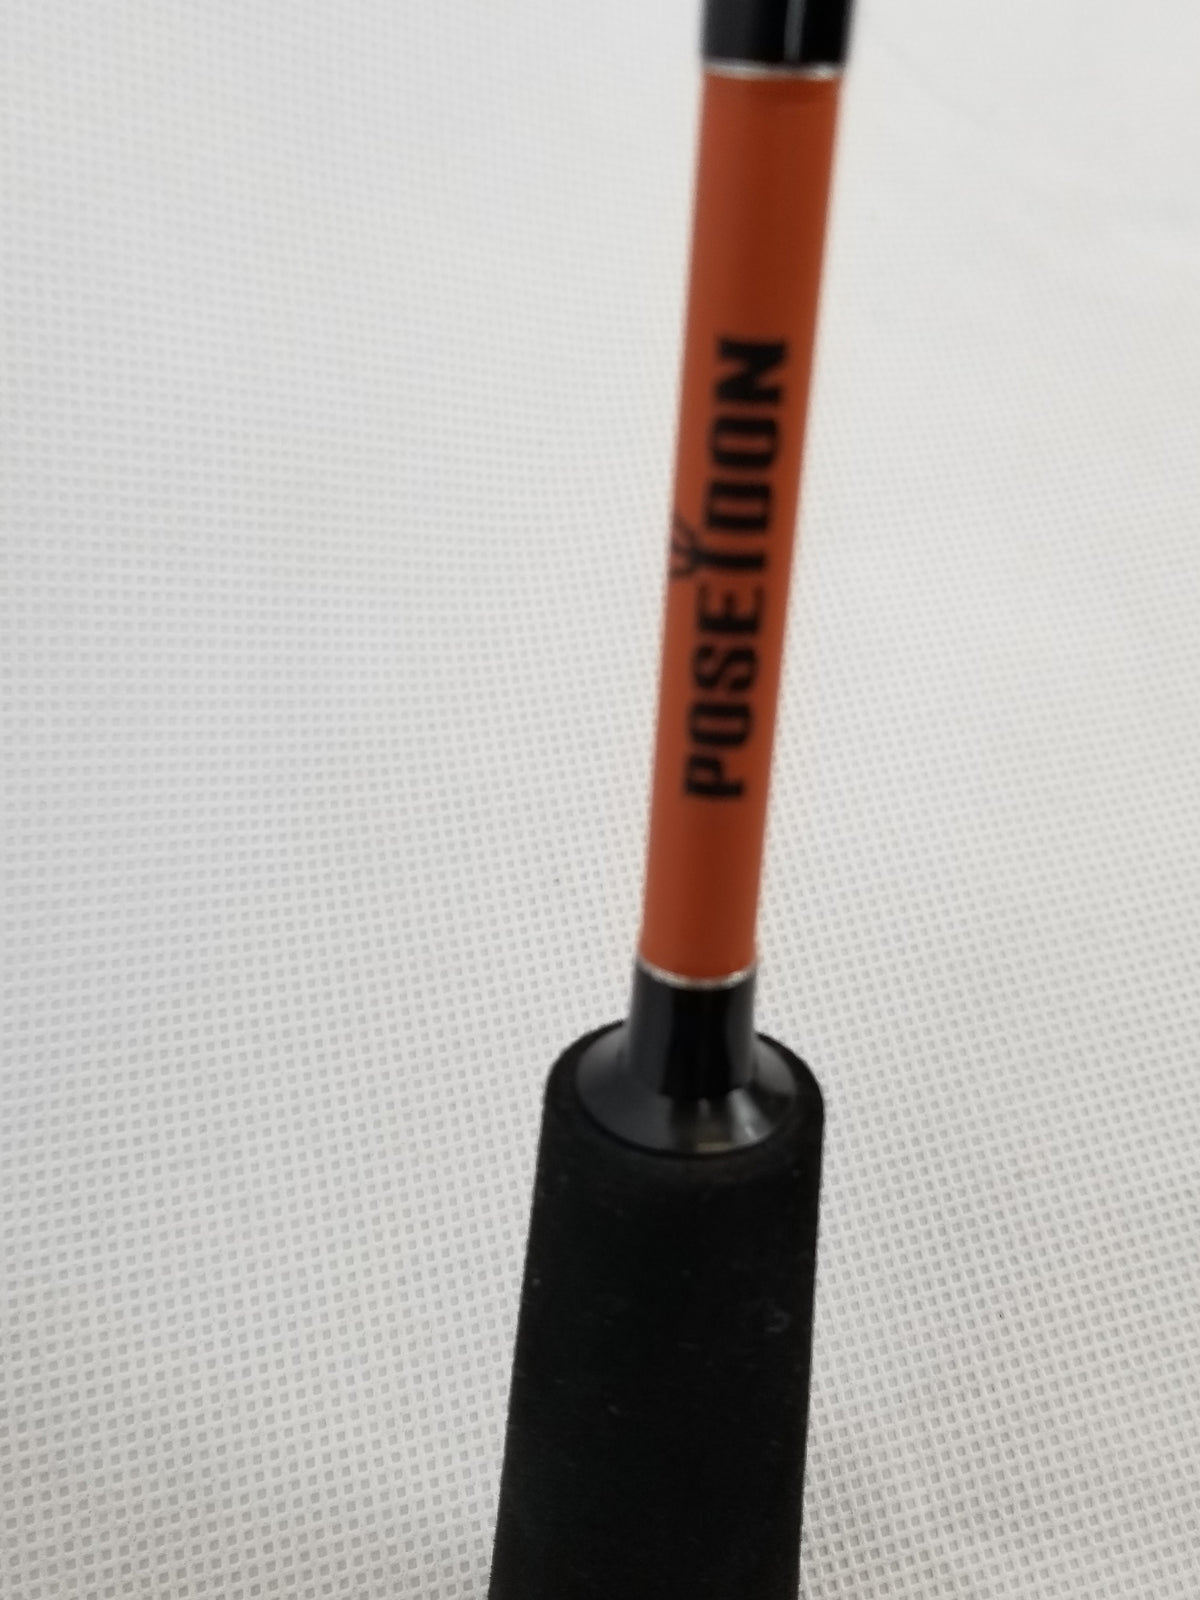 Cam's "Orange Poseidon"  6'6  Spinning Rod and Reel Combo